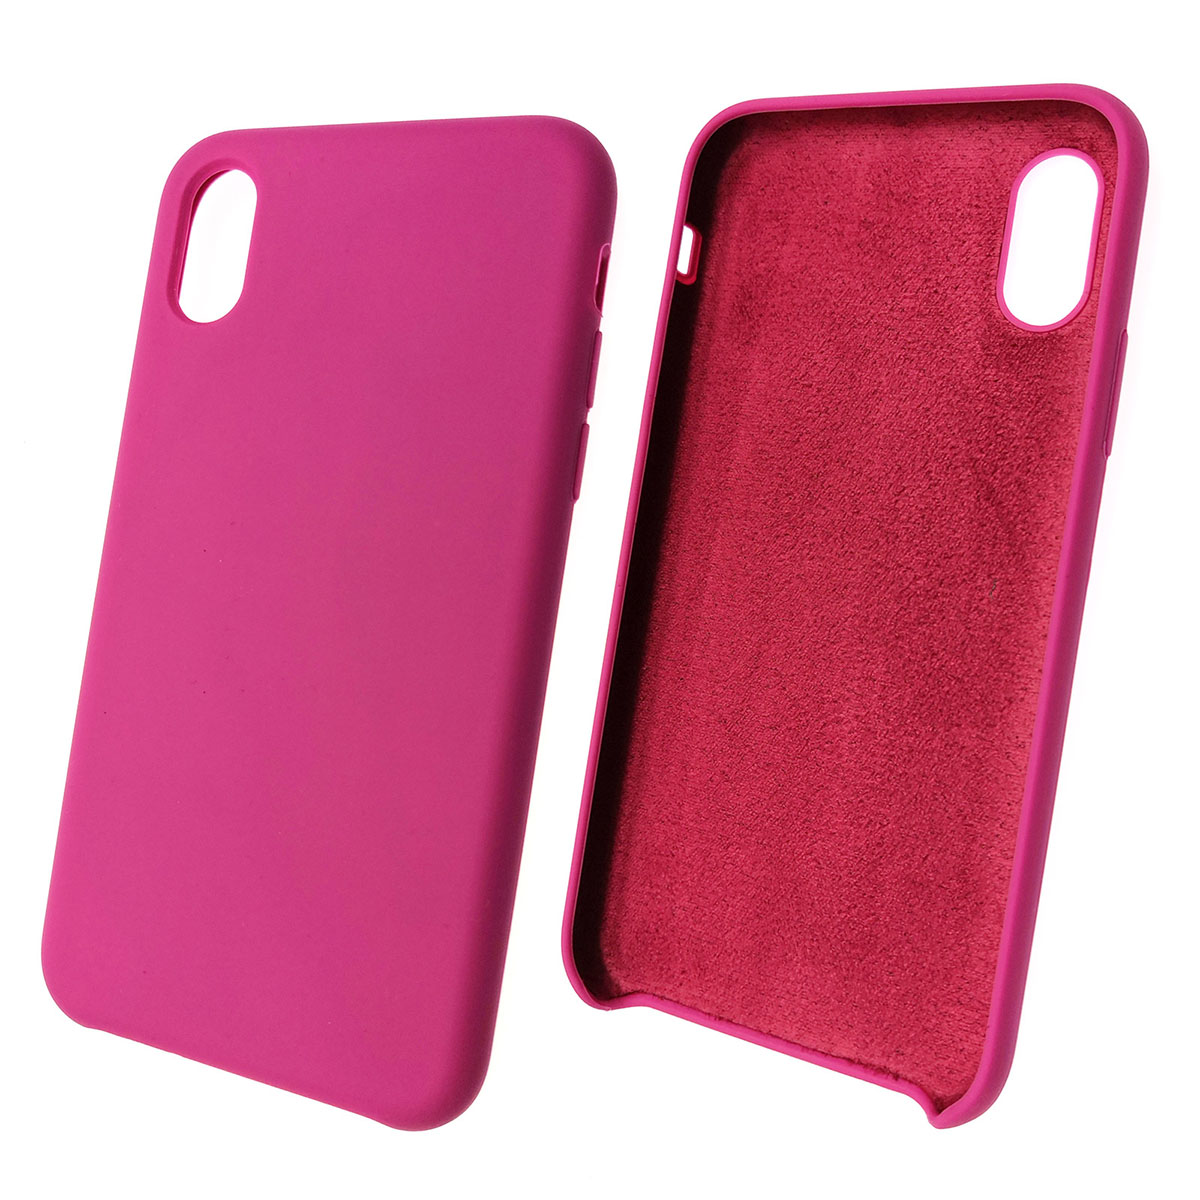 Чехол накладка Silicon Case для APPLE iPhone X, iPhone XS, силикон, бархат, цвет красно фиолетовый